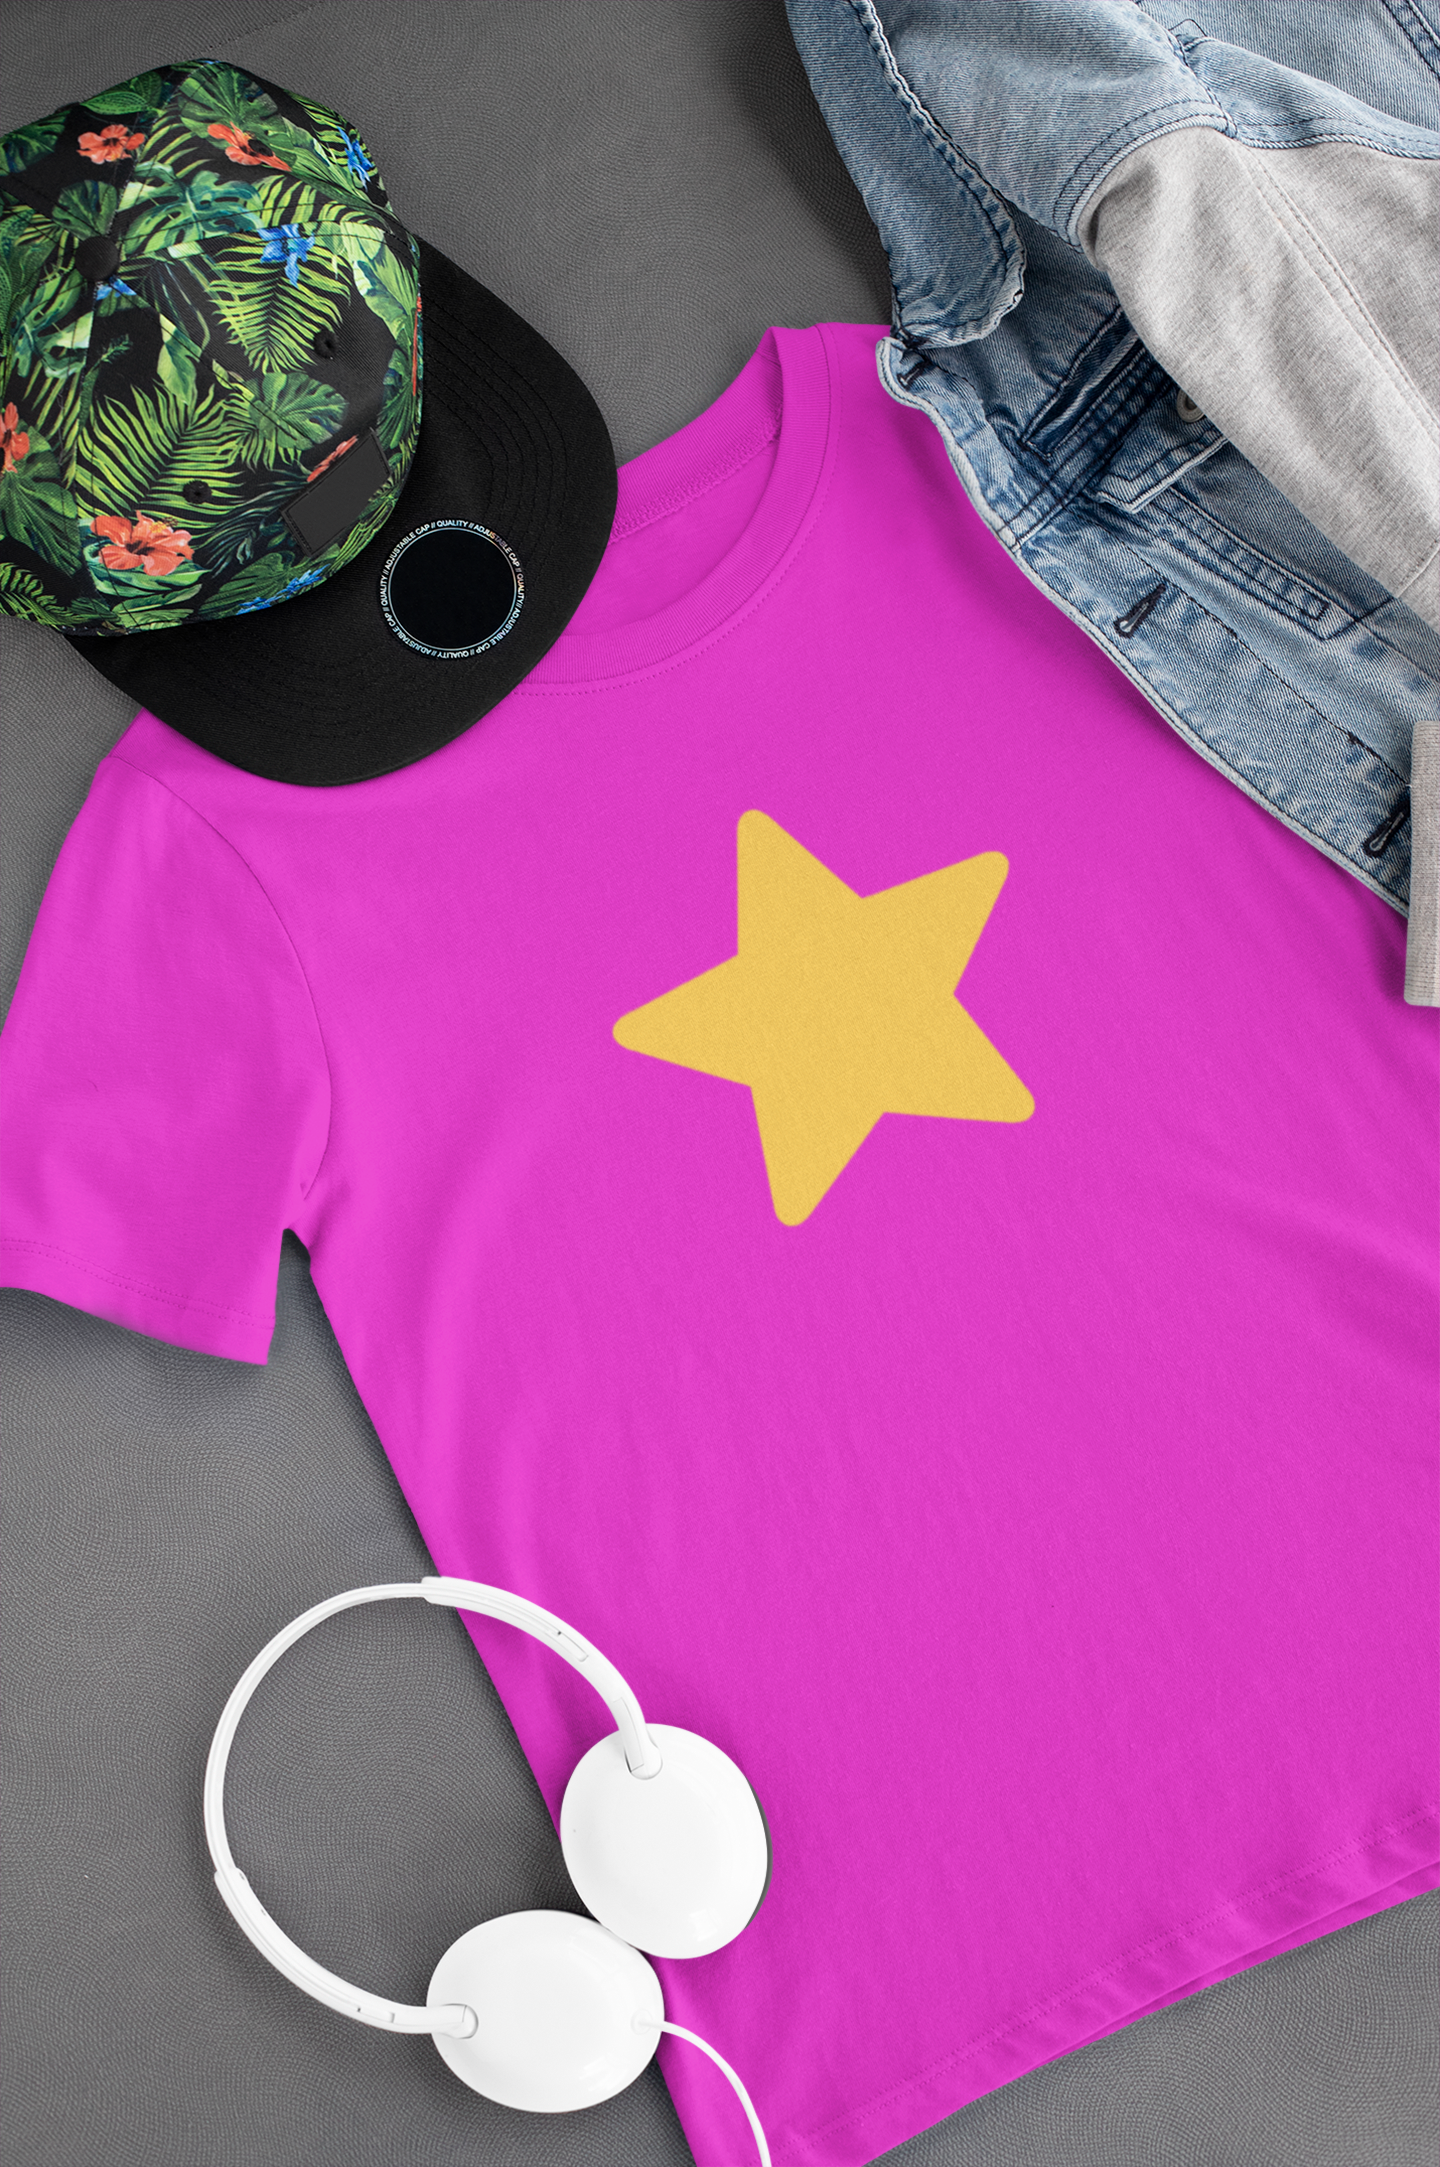 Camiseta Estrela -Steven Universe - Séries de TV